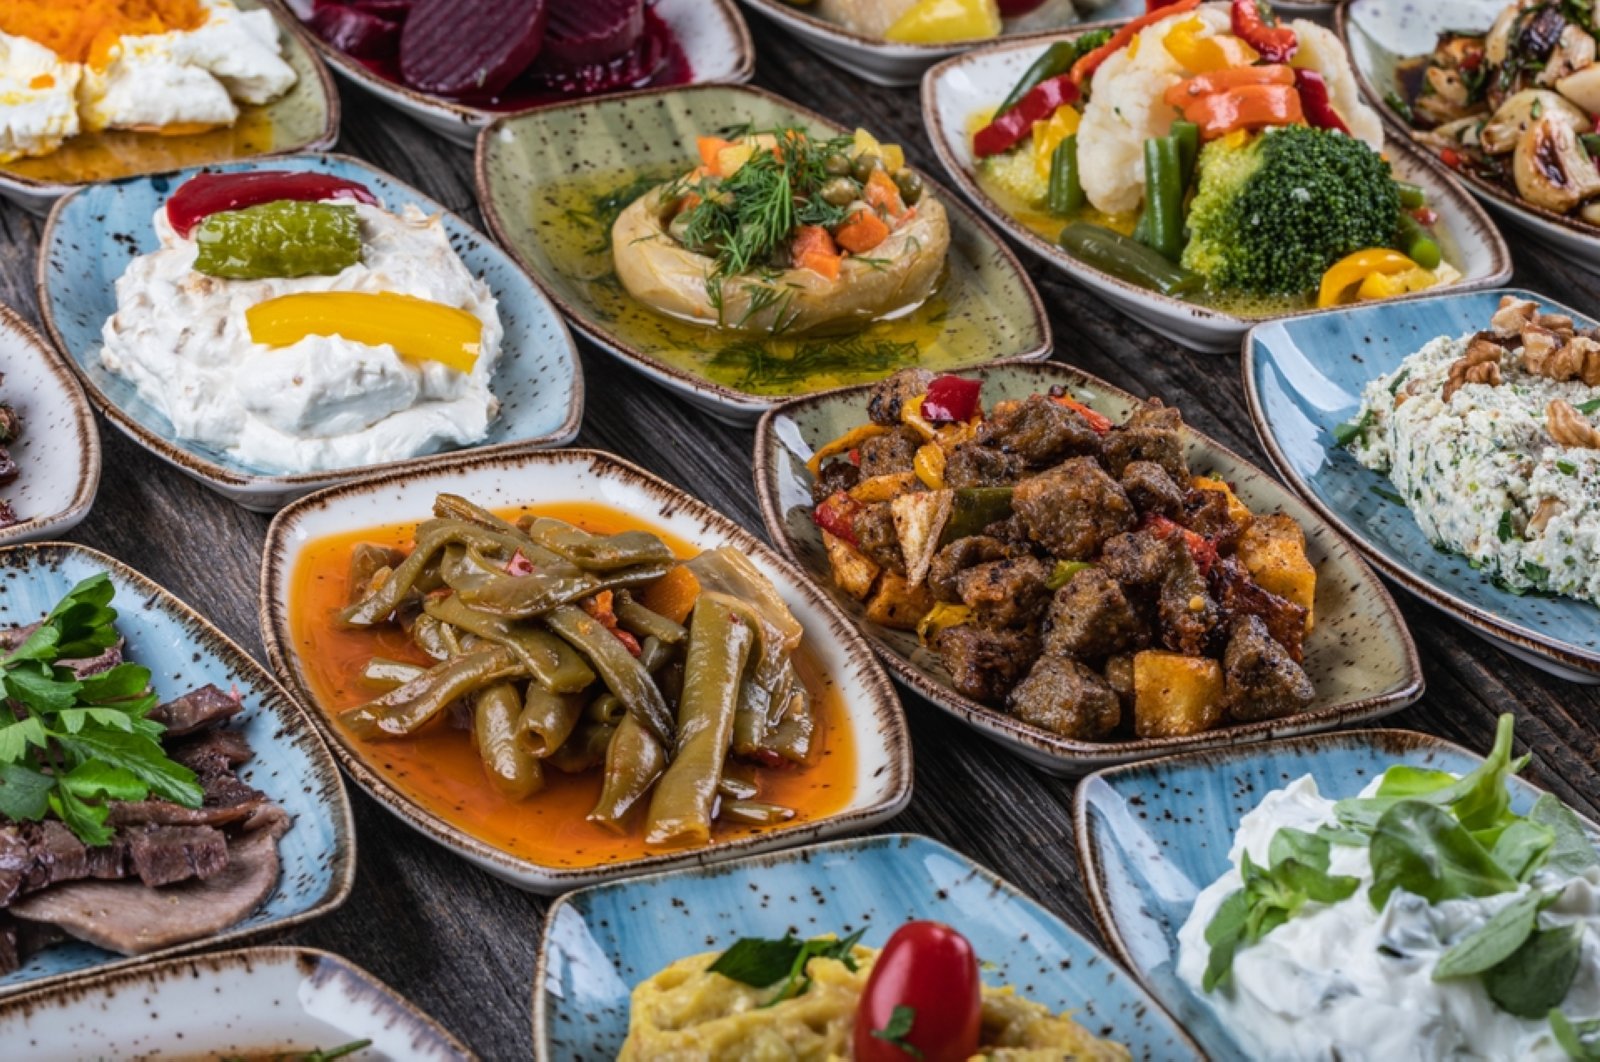 Masalah sebenarnya: Apa yang biasanya dimakan orang Turki setiap hari